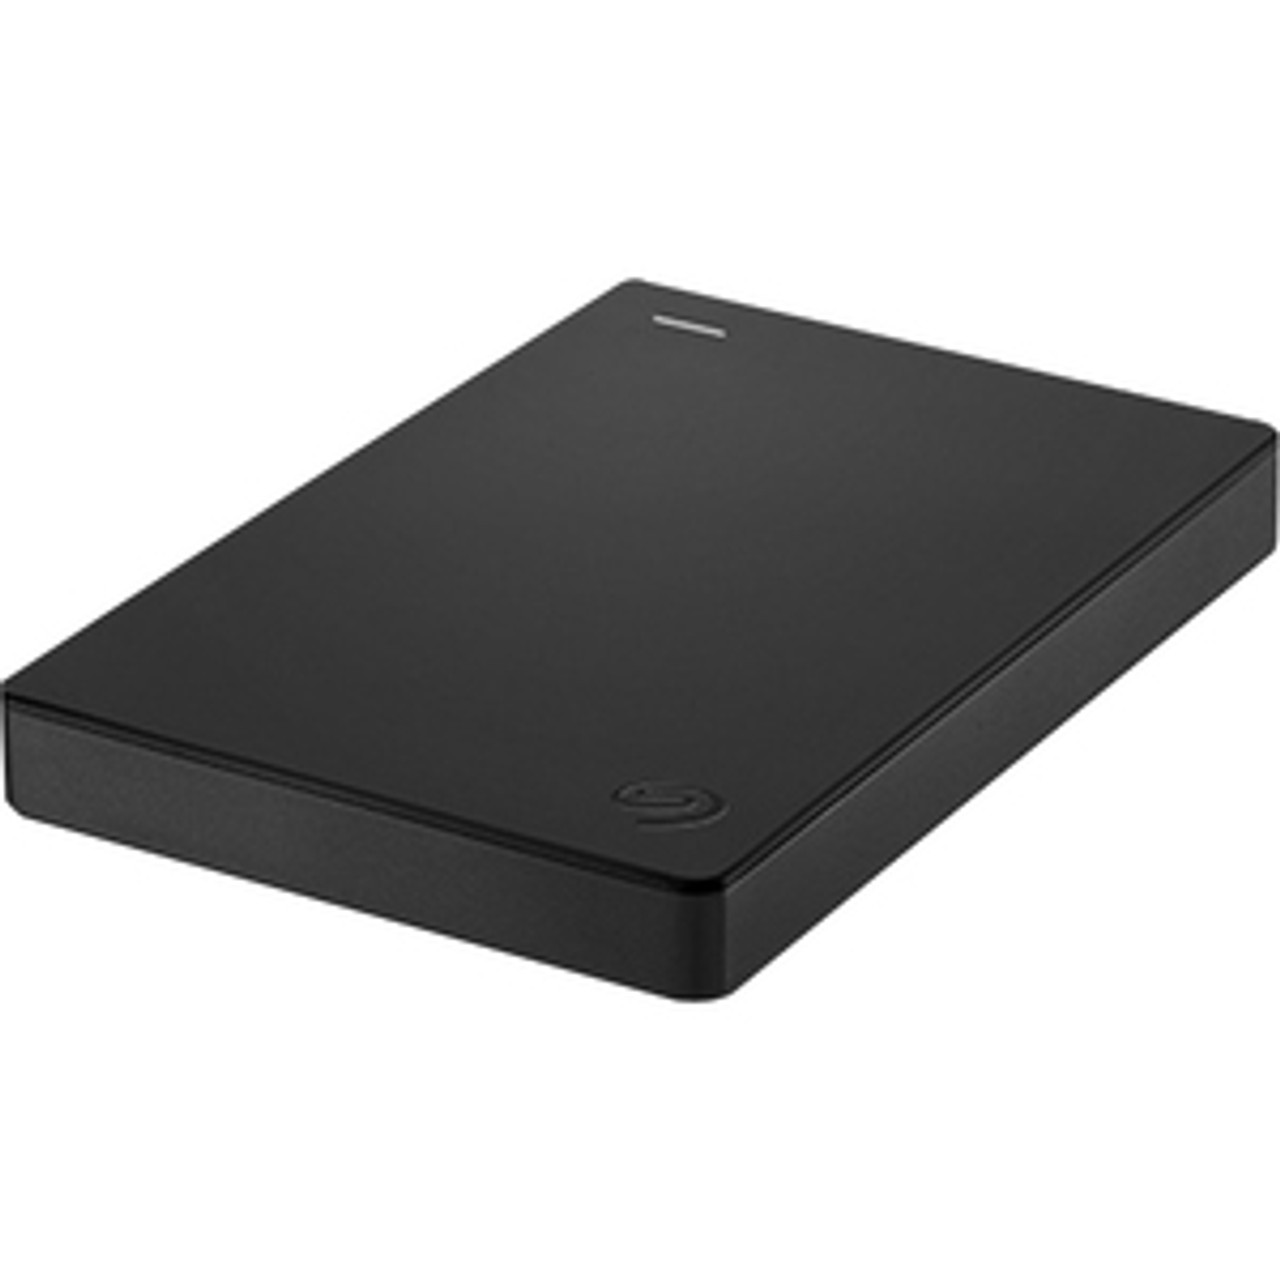 STDS4000400 Backup Plus portable drive for Mac 4TB